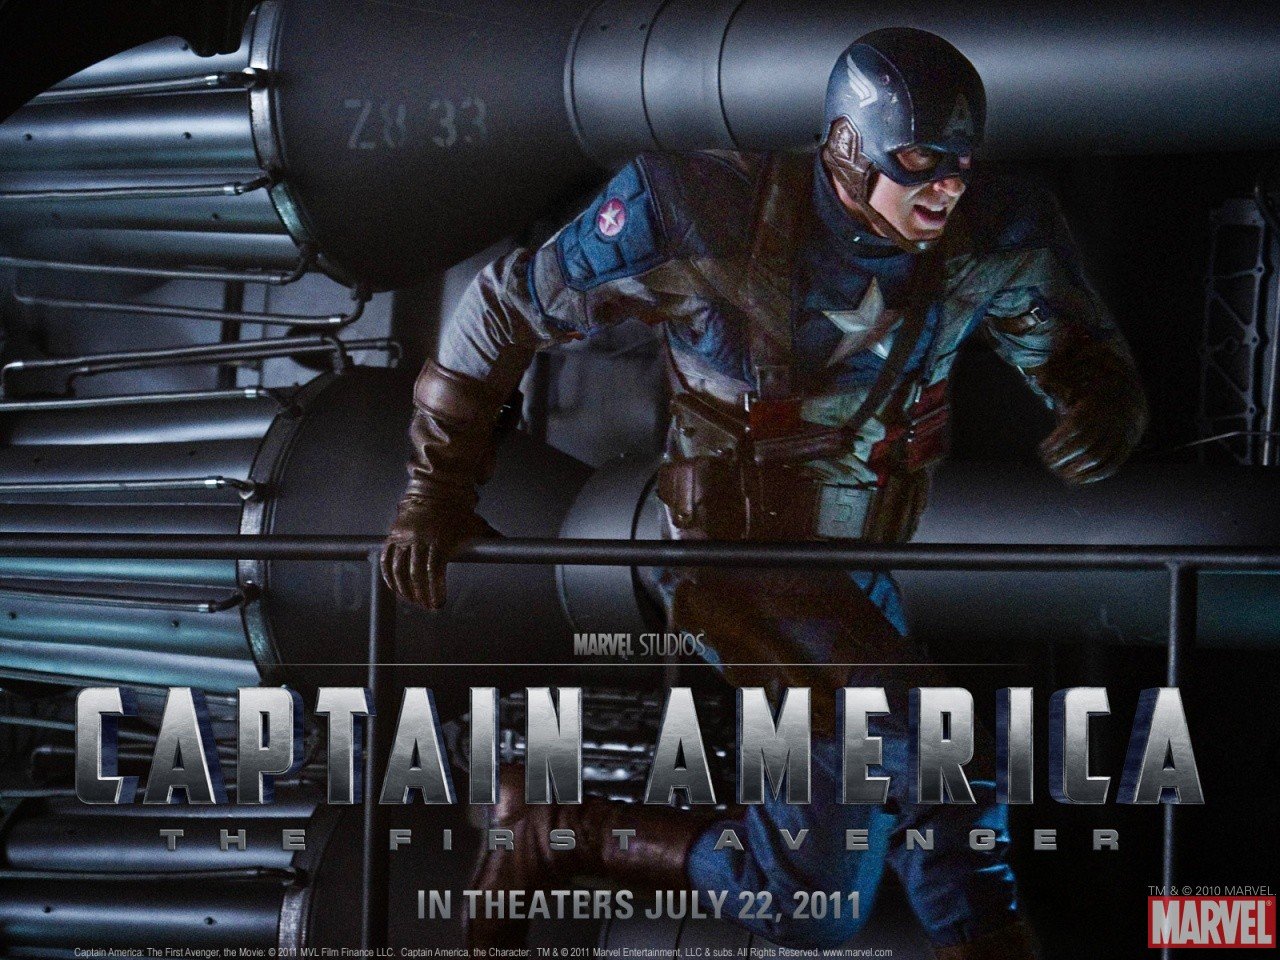 http://1.bp.blogspot.com/-trWNoa5EBWA/TwaUIocv9oI/AAAAAAAADlM/oVl0c9f2iP4/s1600/Captain-America-The-First-Avenger-02.jpg